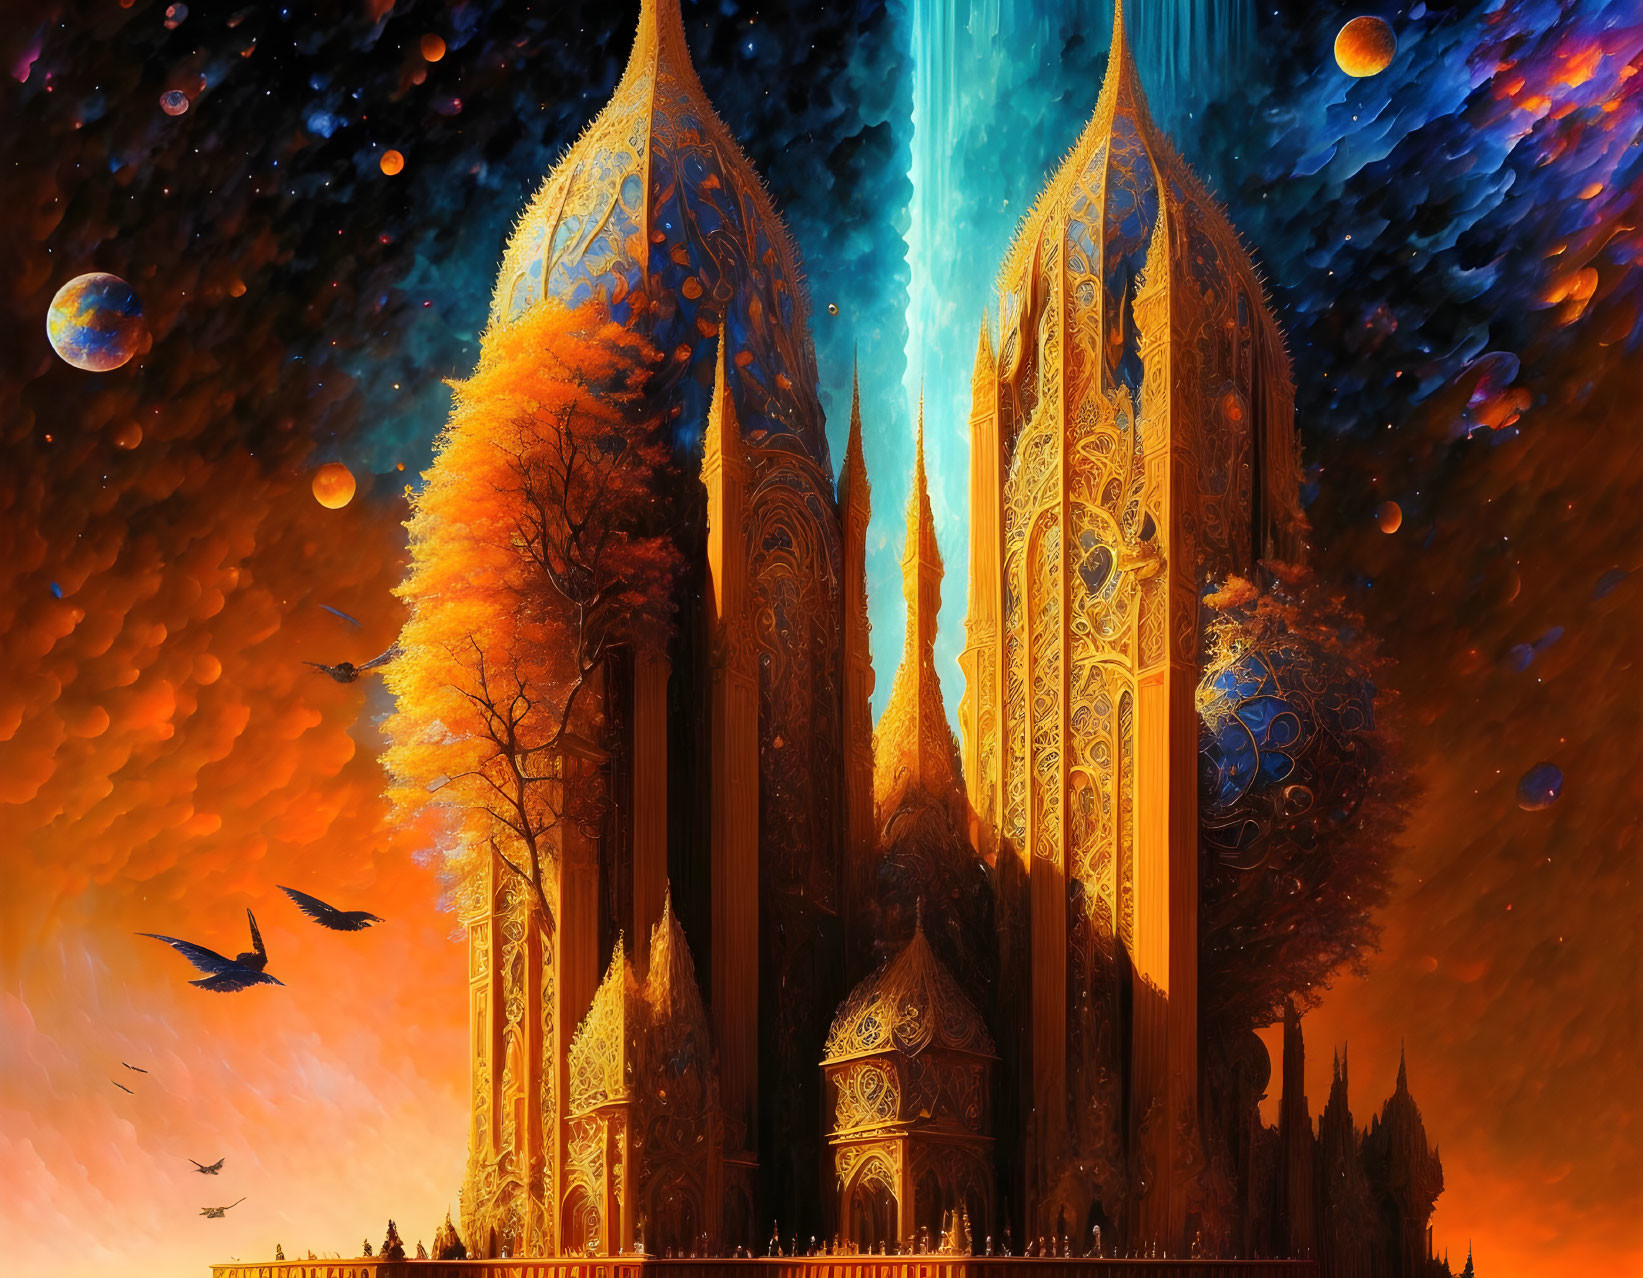 Fantasy landscape with golden spires in cosmic sky